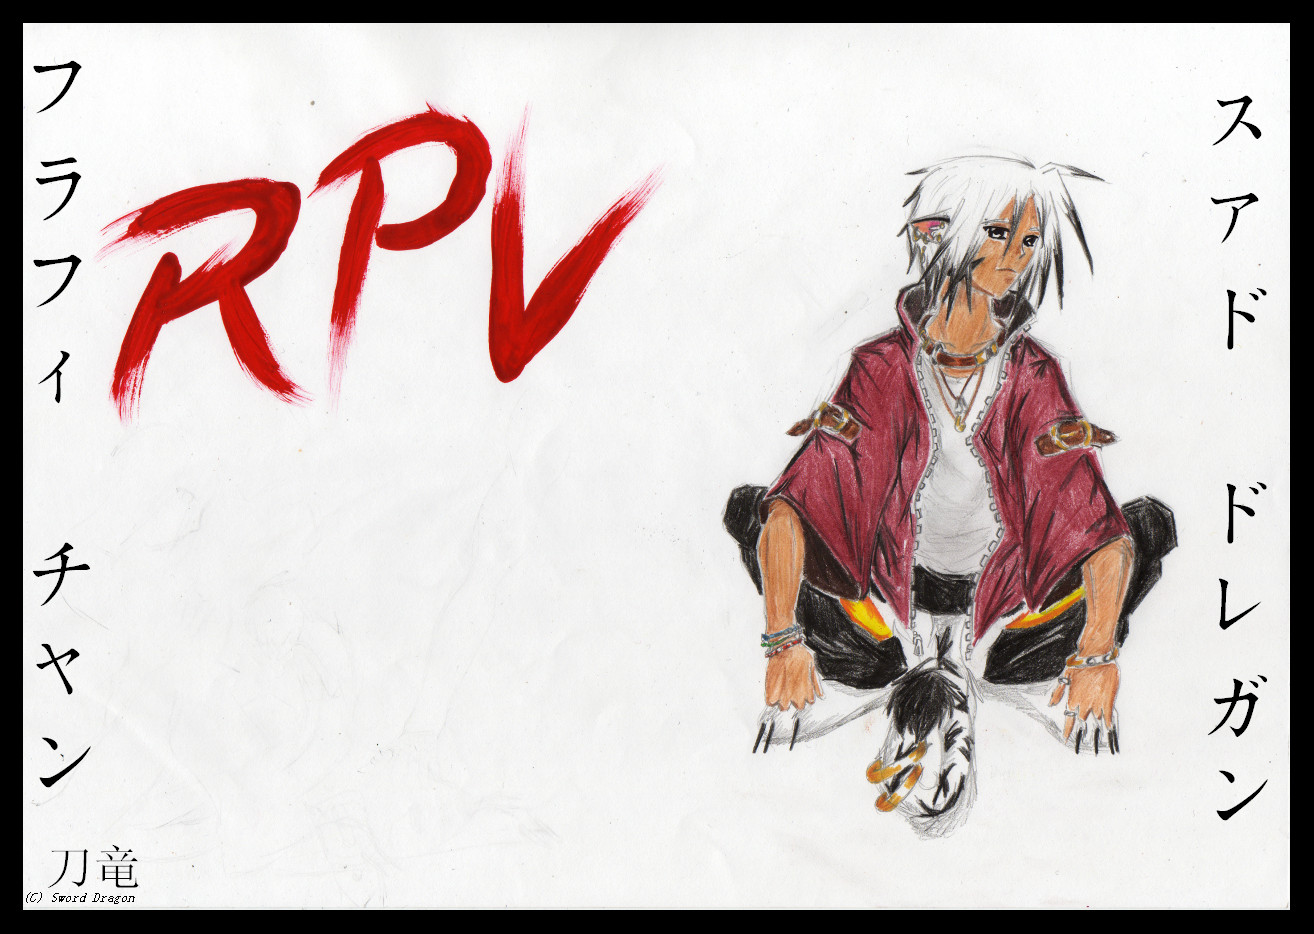 RPV Riley by sword_dragon